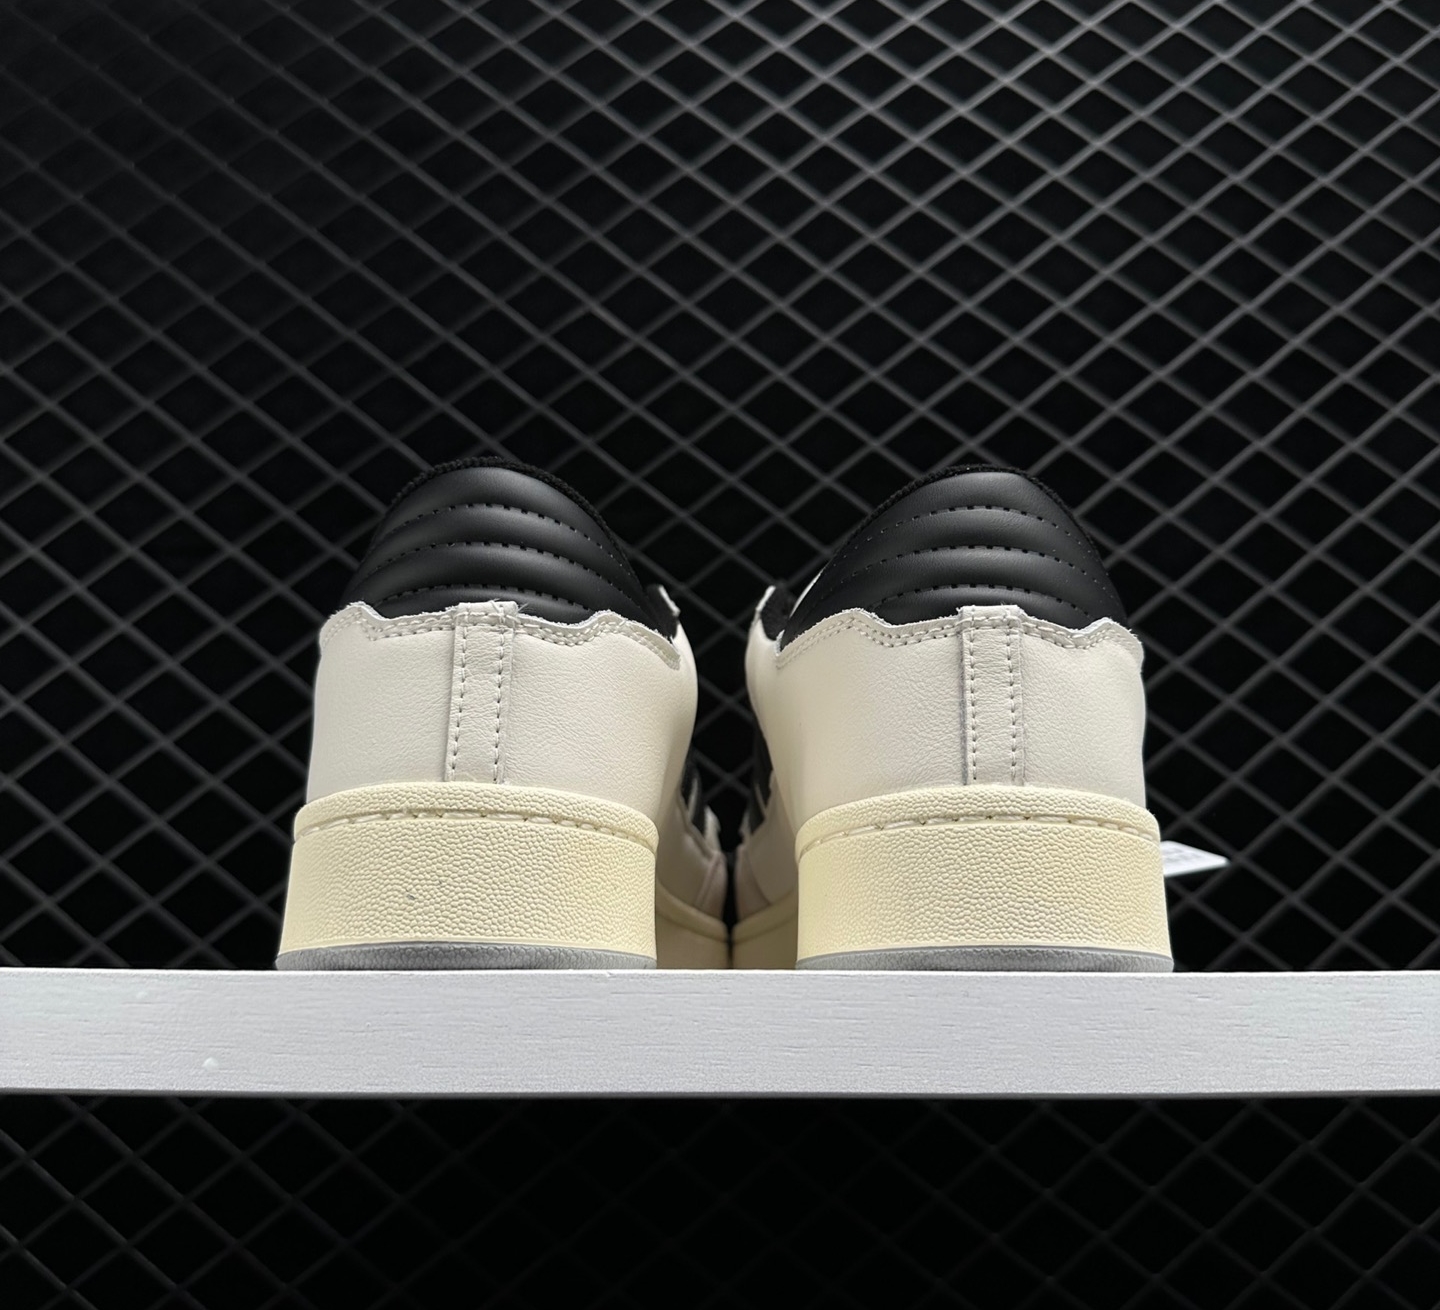 Adidas Centennial 85 Low Cream White Core Black Light Grey - GX2215